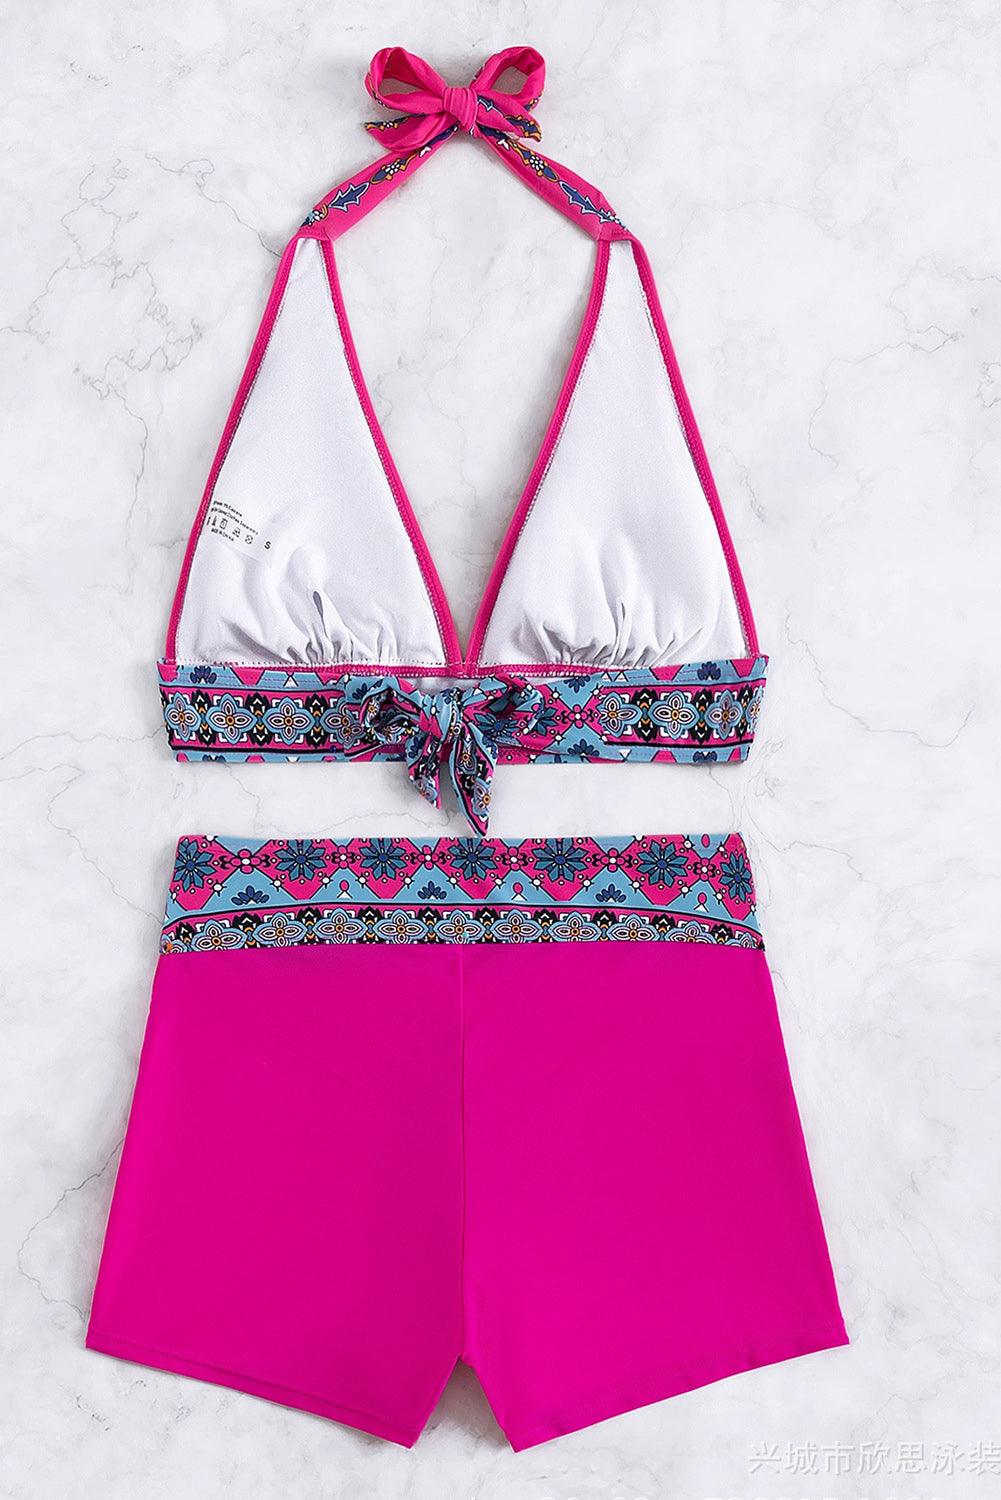 Rose Floral Print Halter Swim Top with Boyshorts Bikini Swimsuit - L & M Kee, LLC